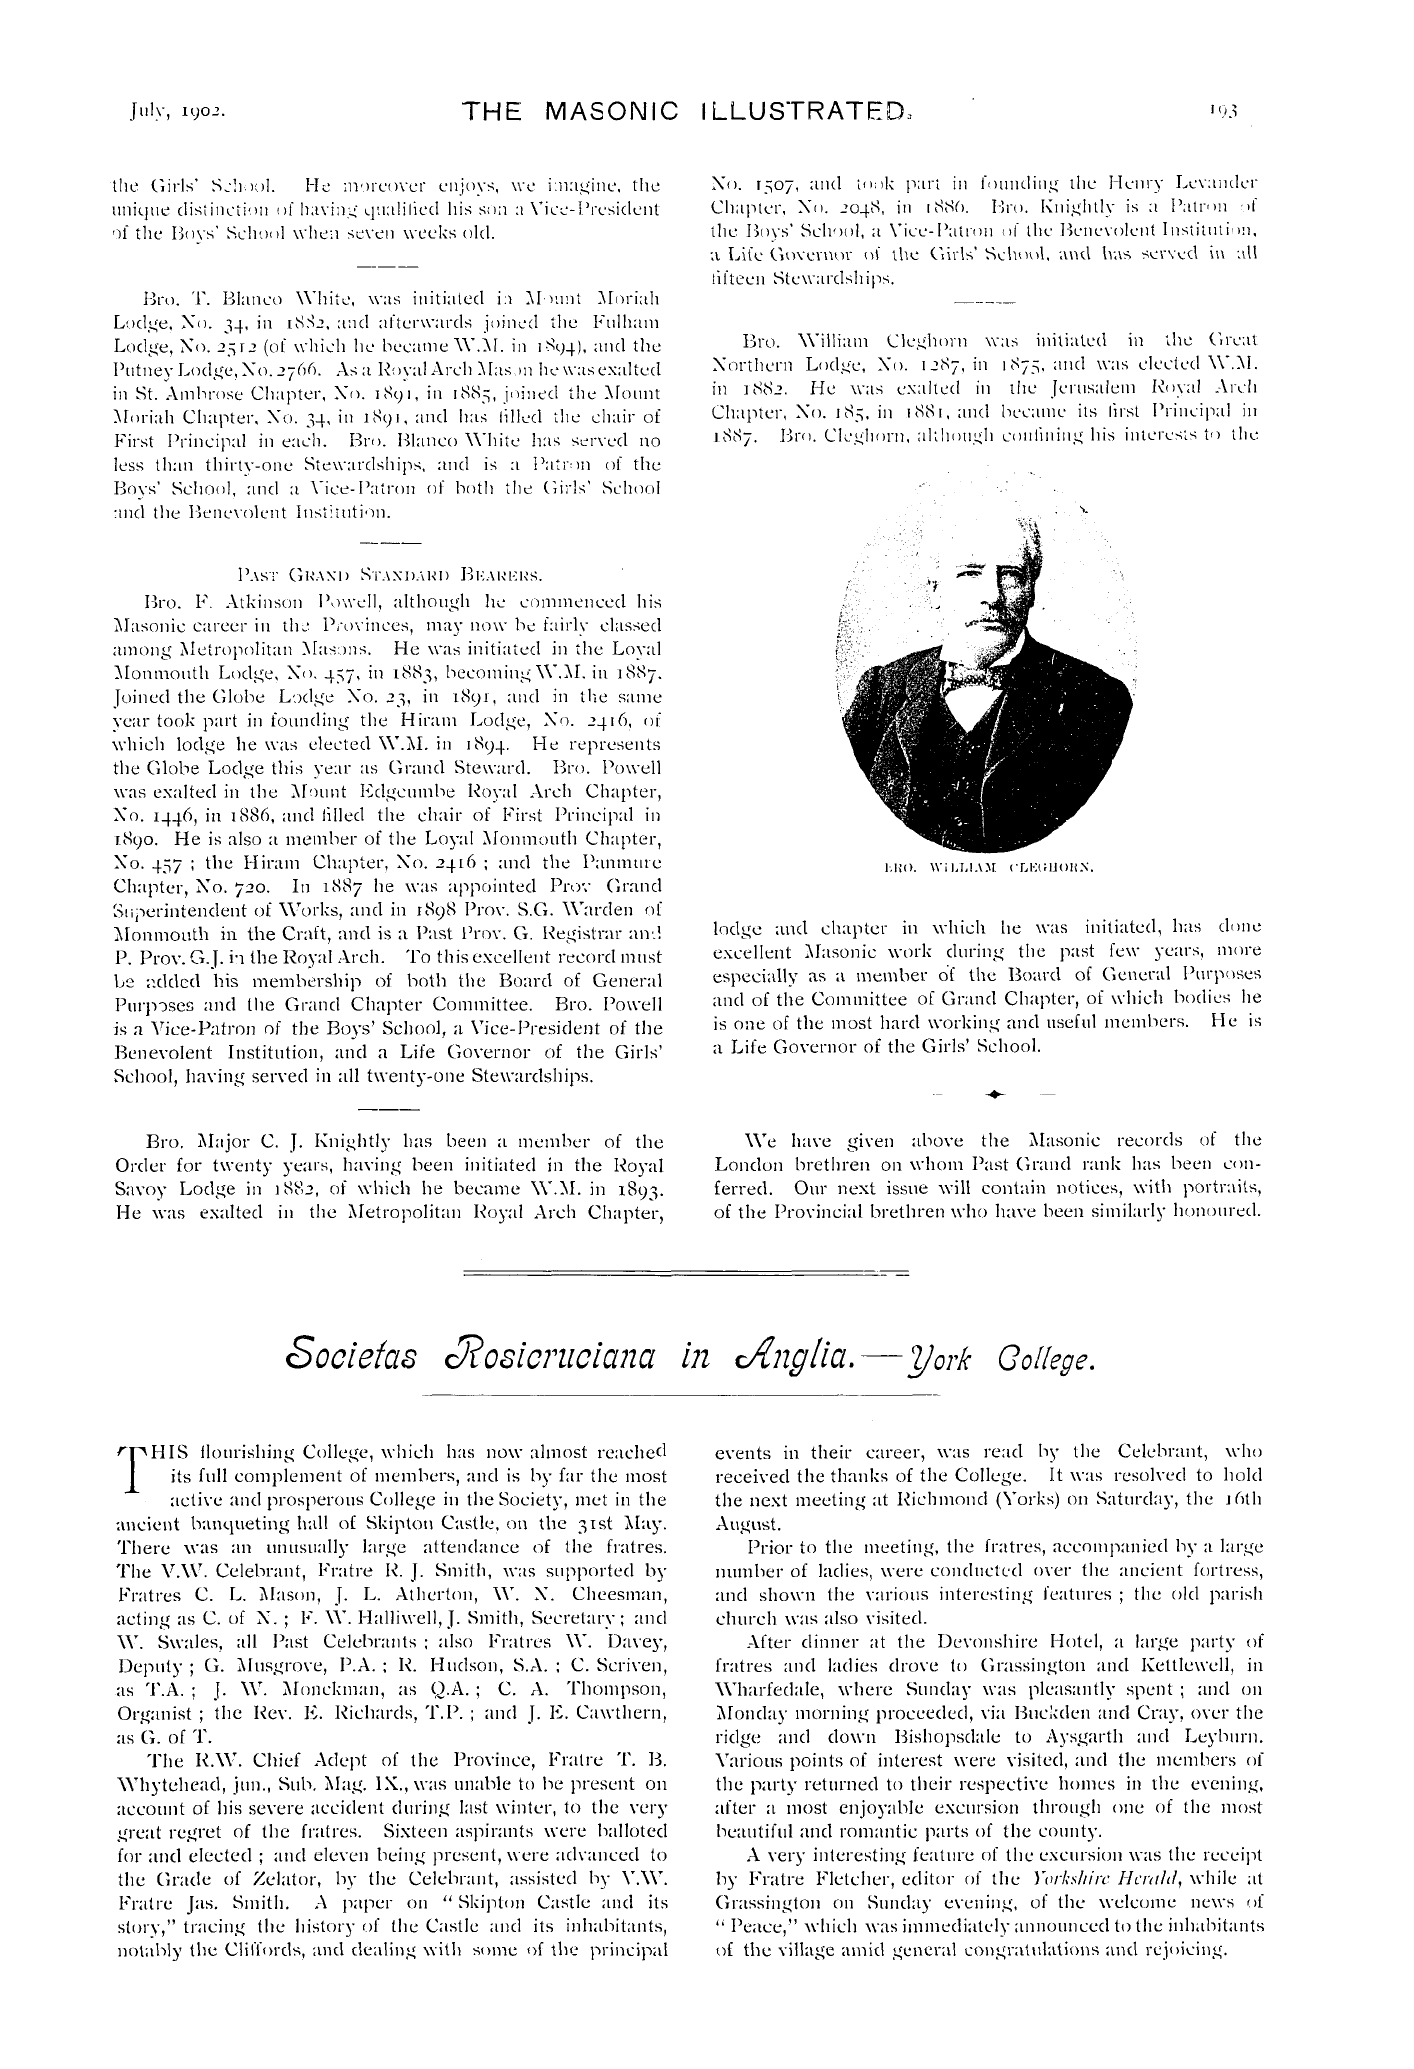 The Masonic Illustrated: 1902-07-01: 9